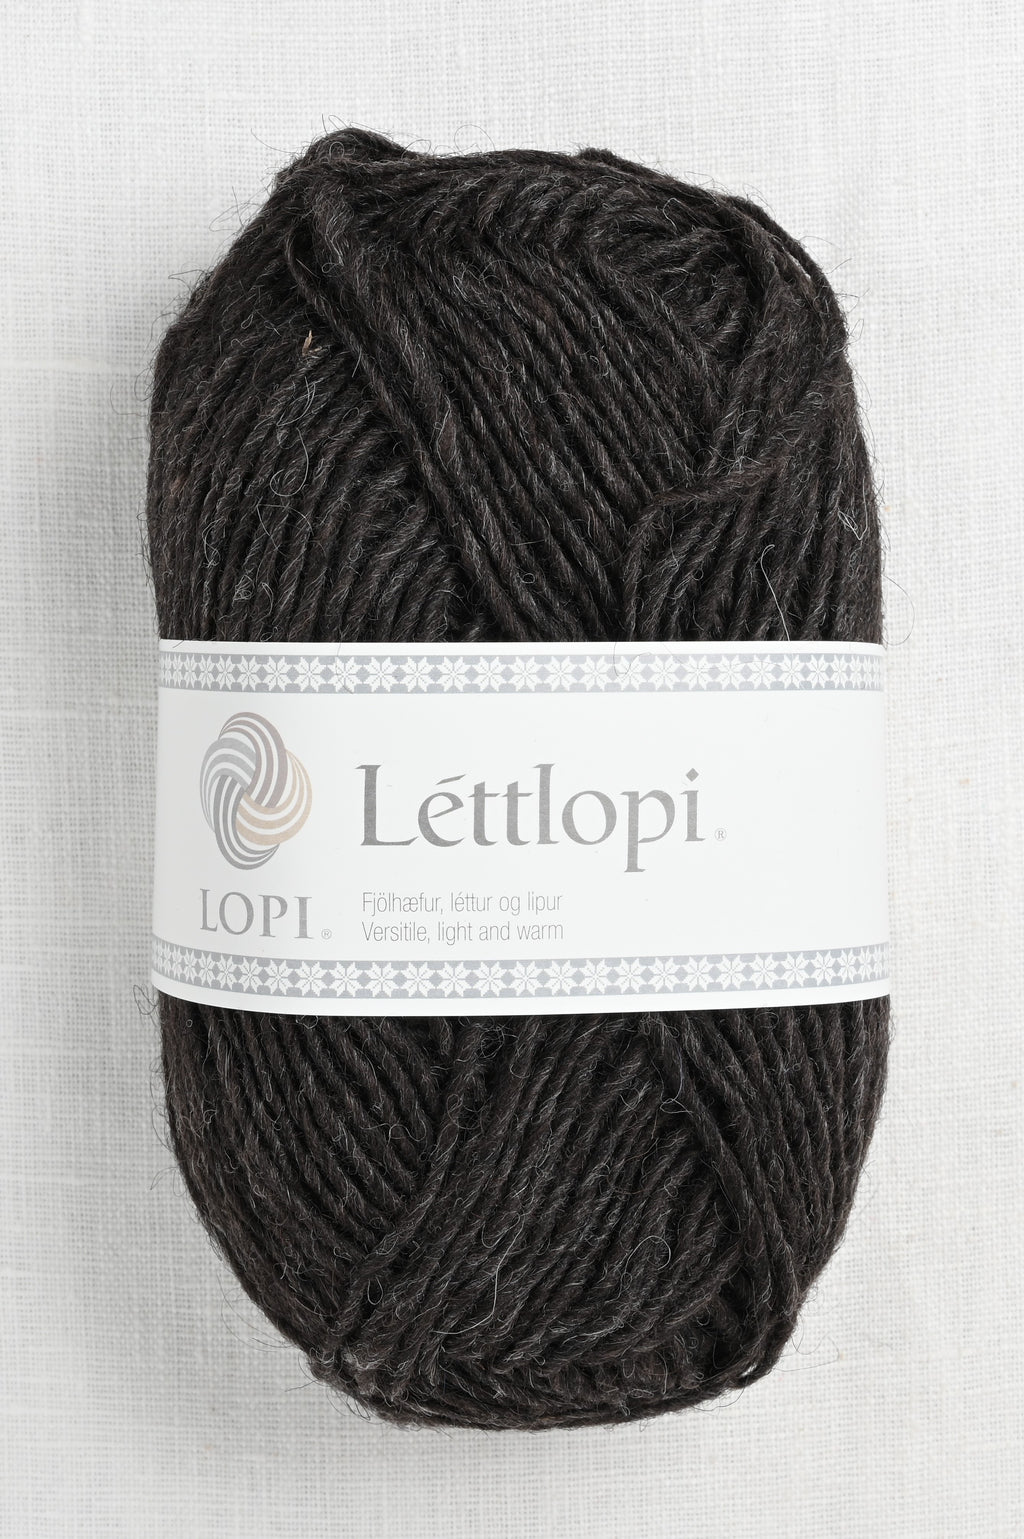 lopi lettlopi 0052 black sheep